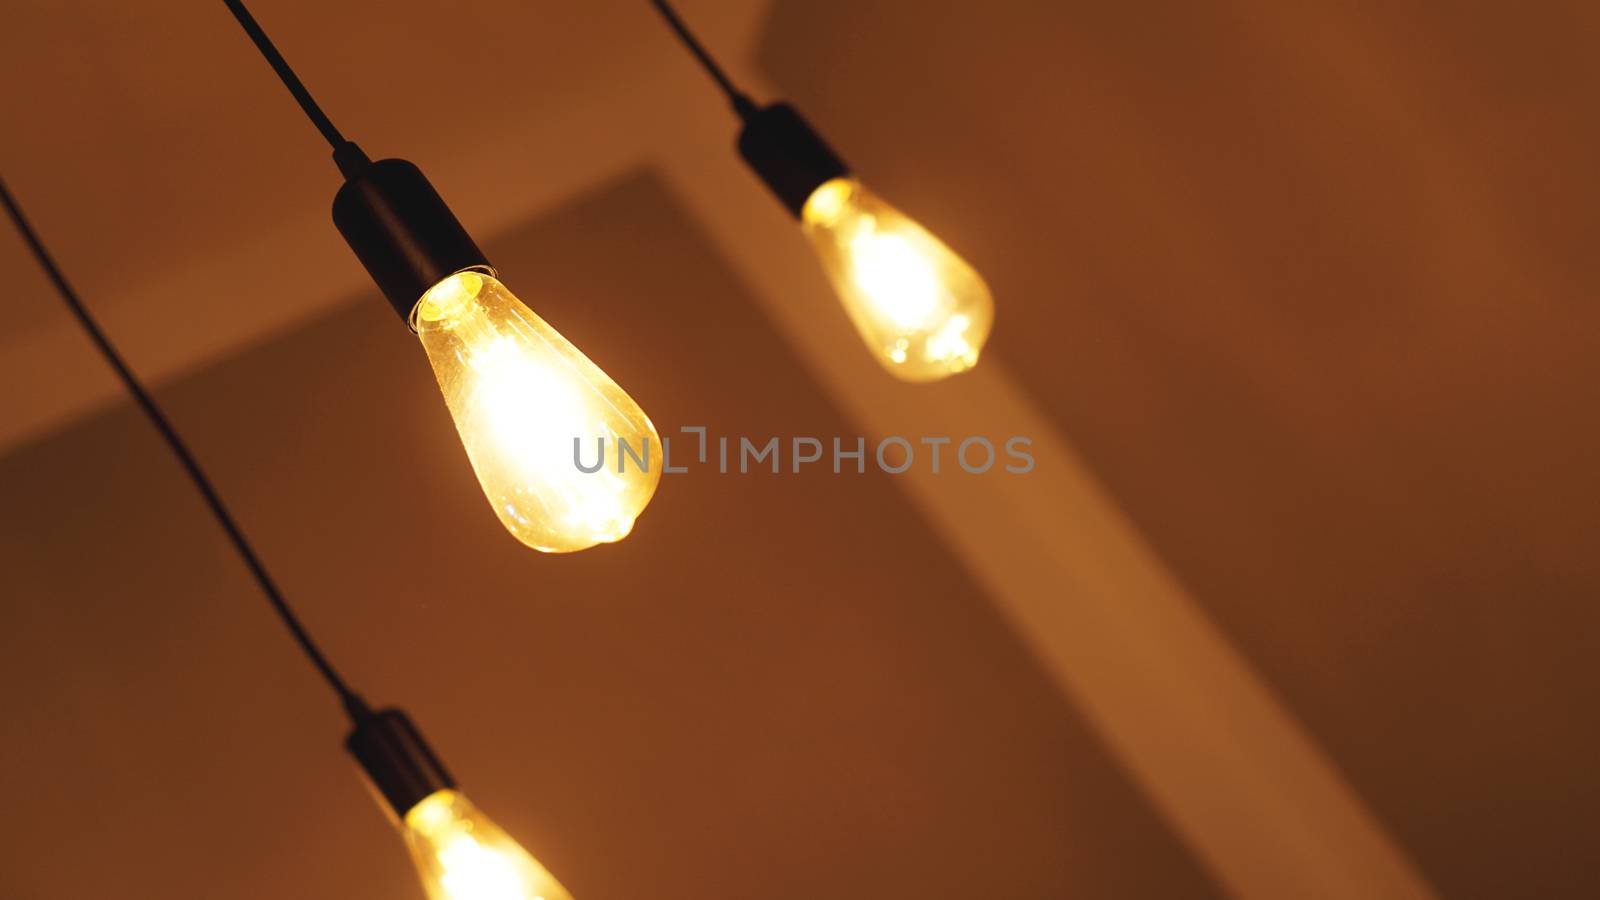 Decorative antique edison style light tungsten bulbs by natali_brill